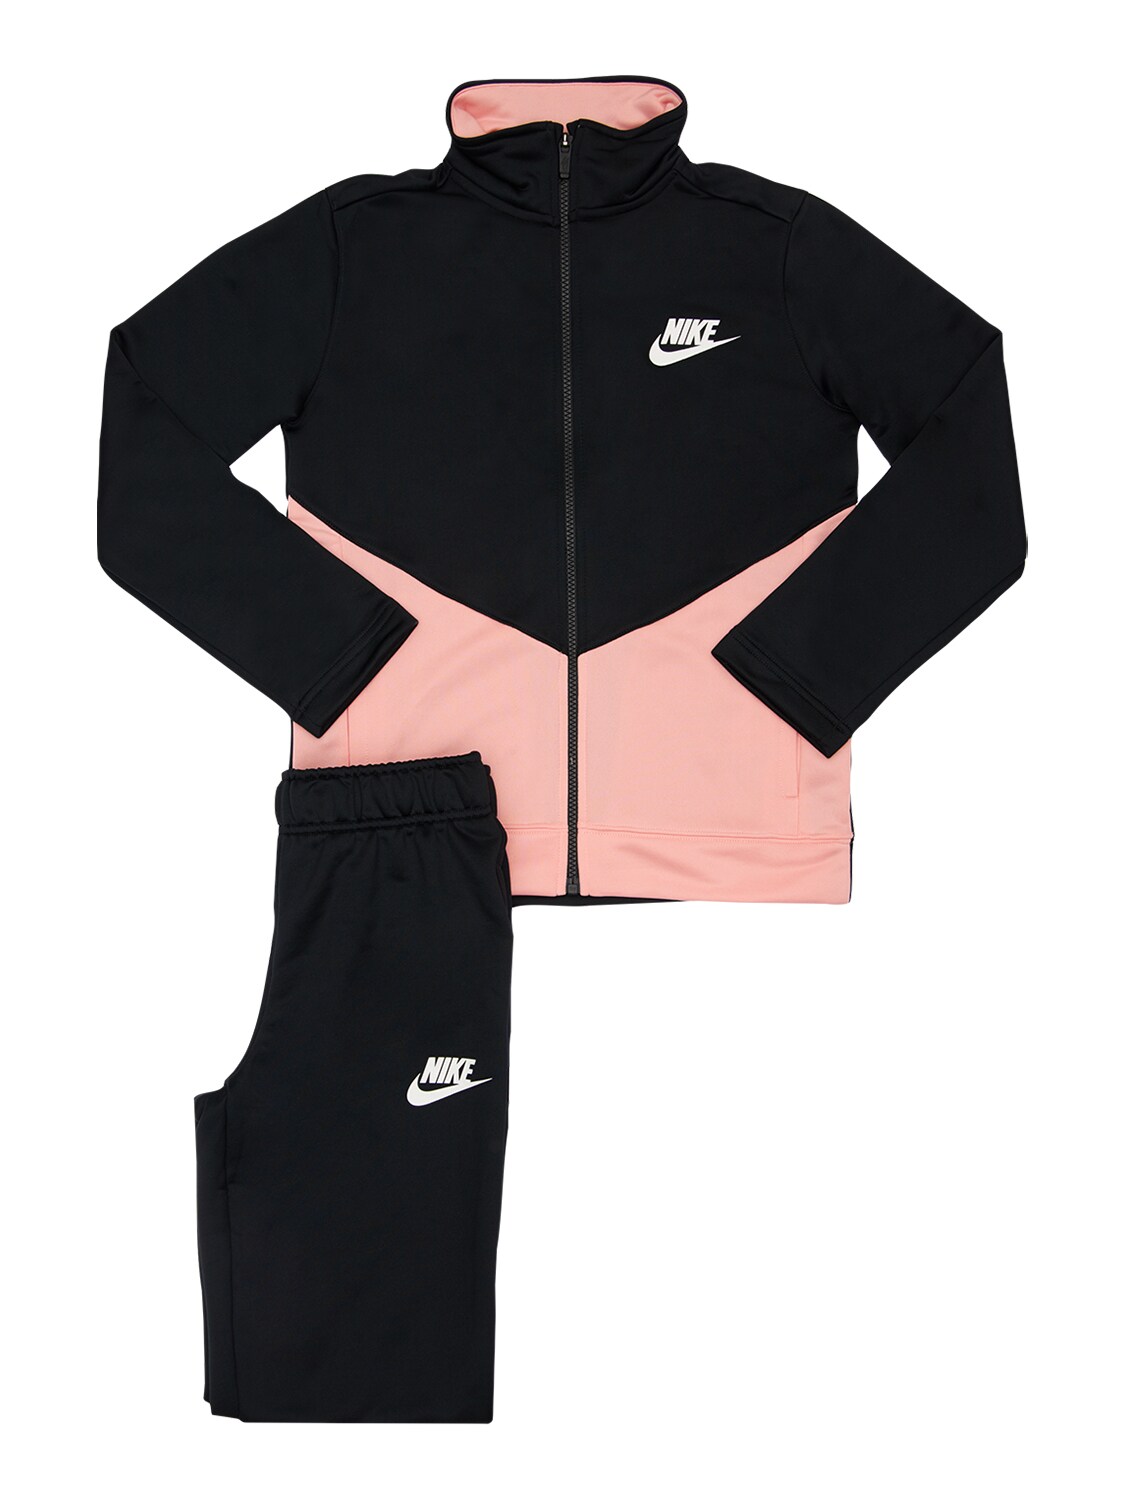 Nike Babies' Logo科技织物运动套装 In Black,pink